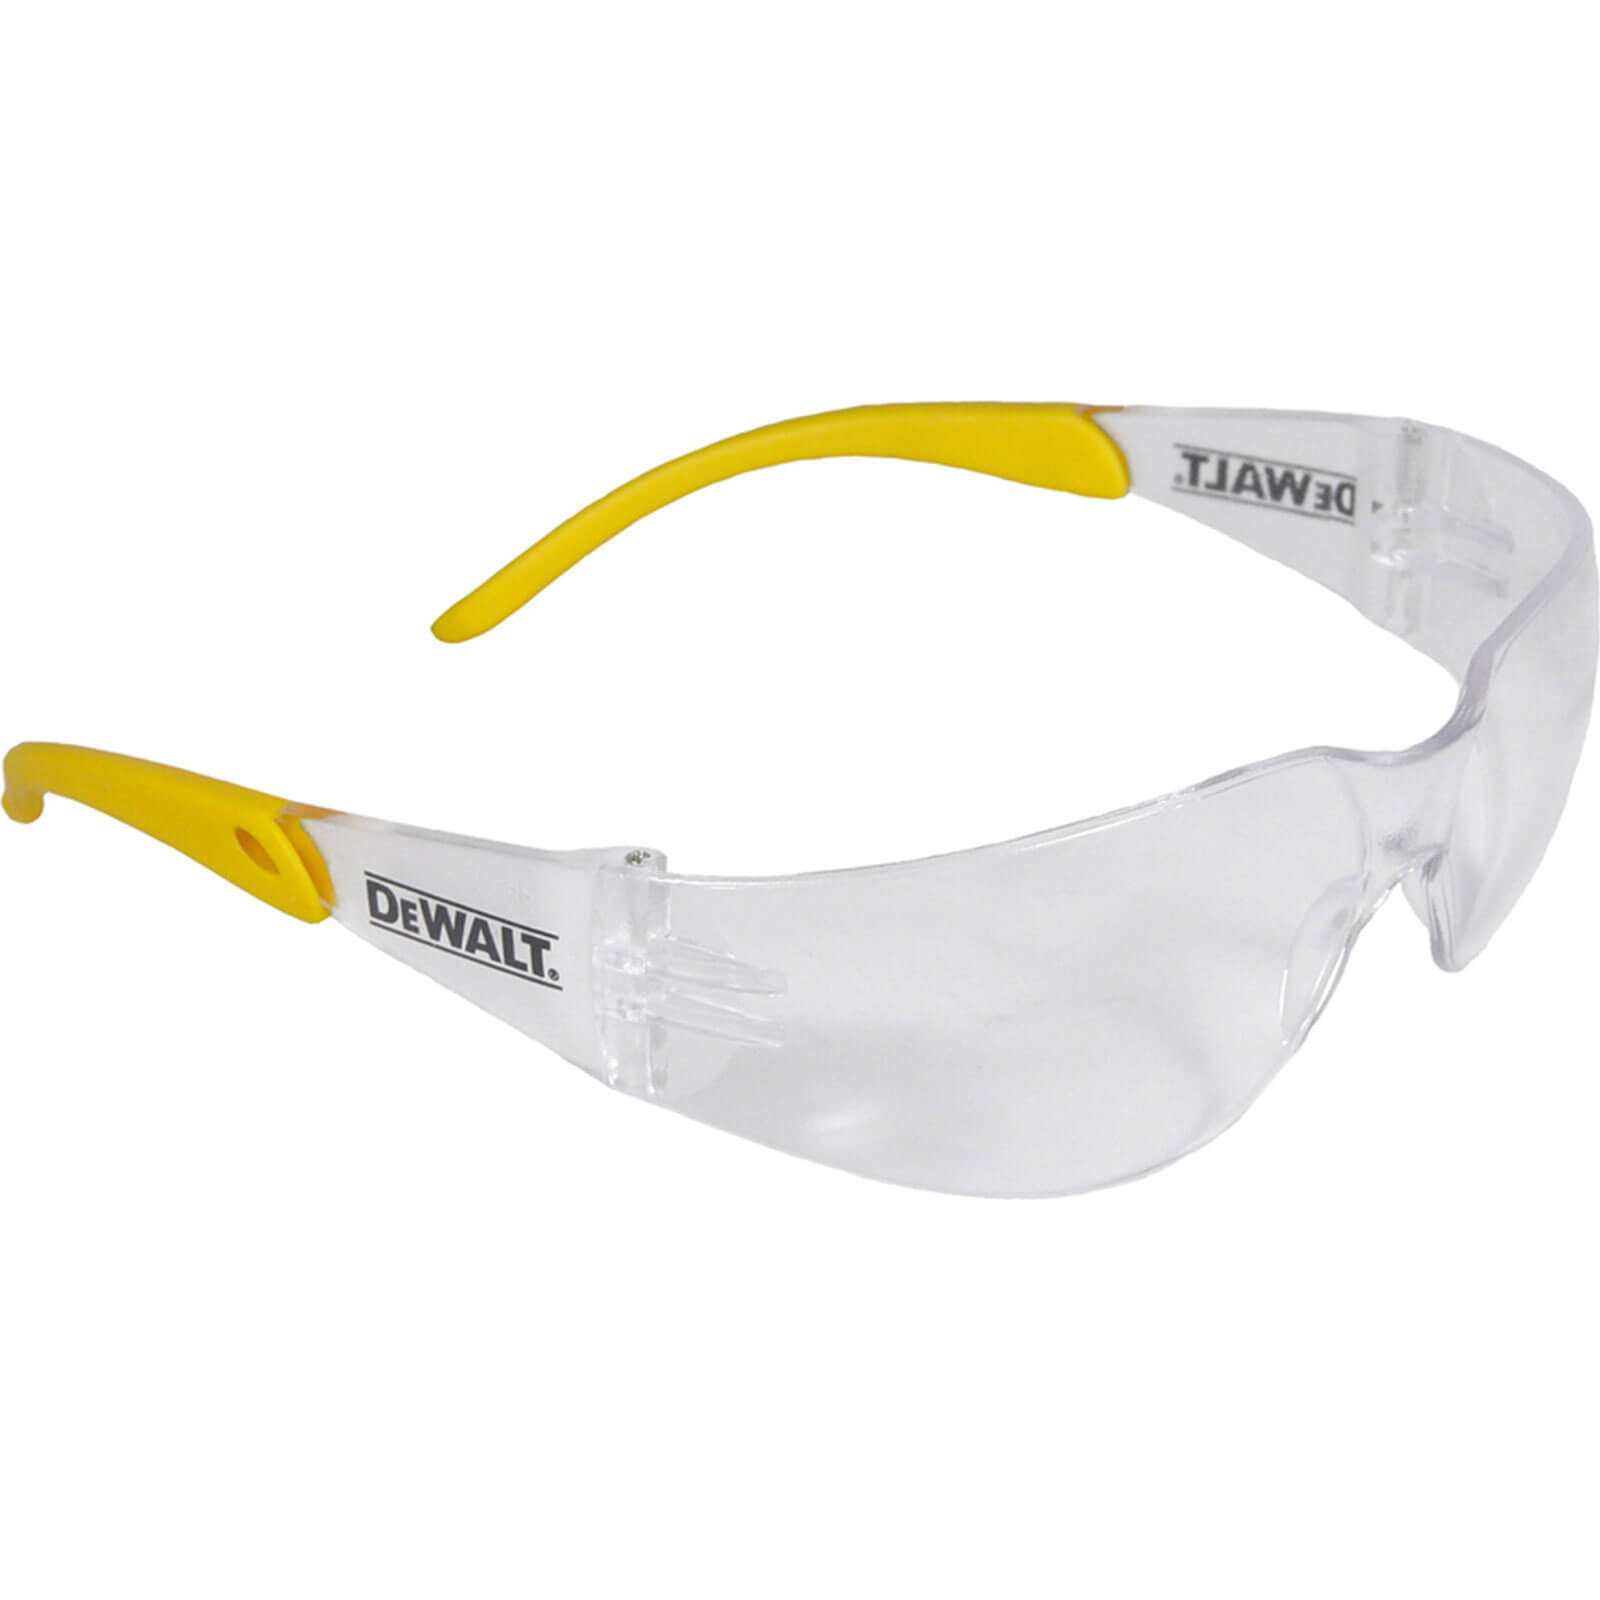 Image of DeWalt Protector Clear Safety Glasses